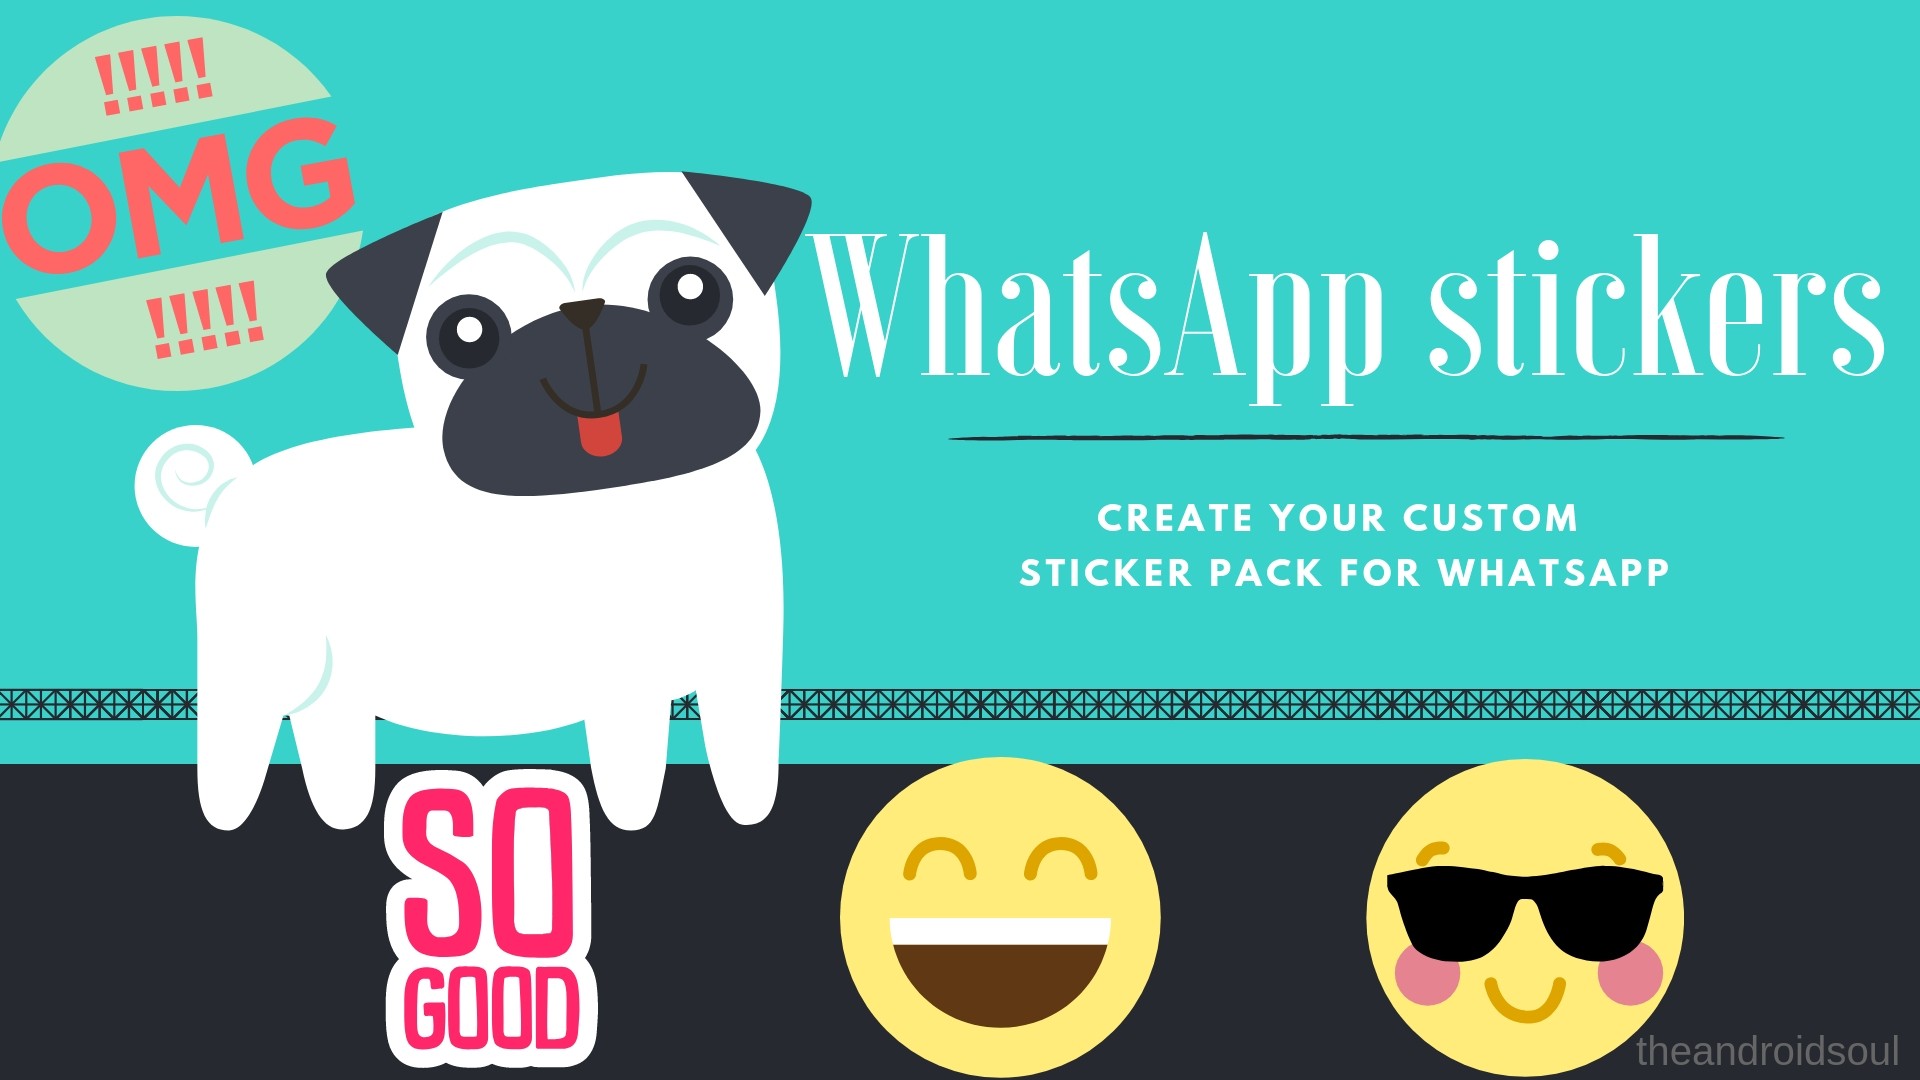 How to create your own custom WhatsApp sticker pack